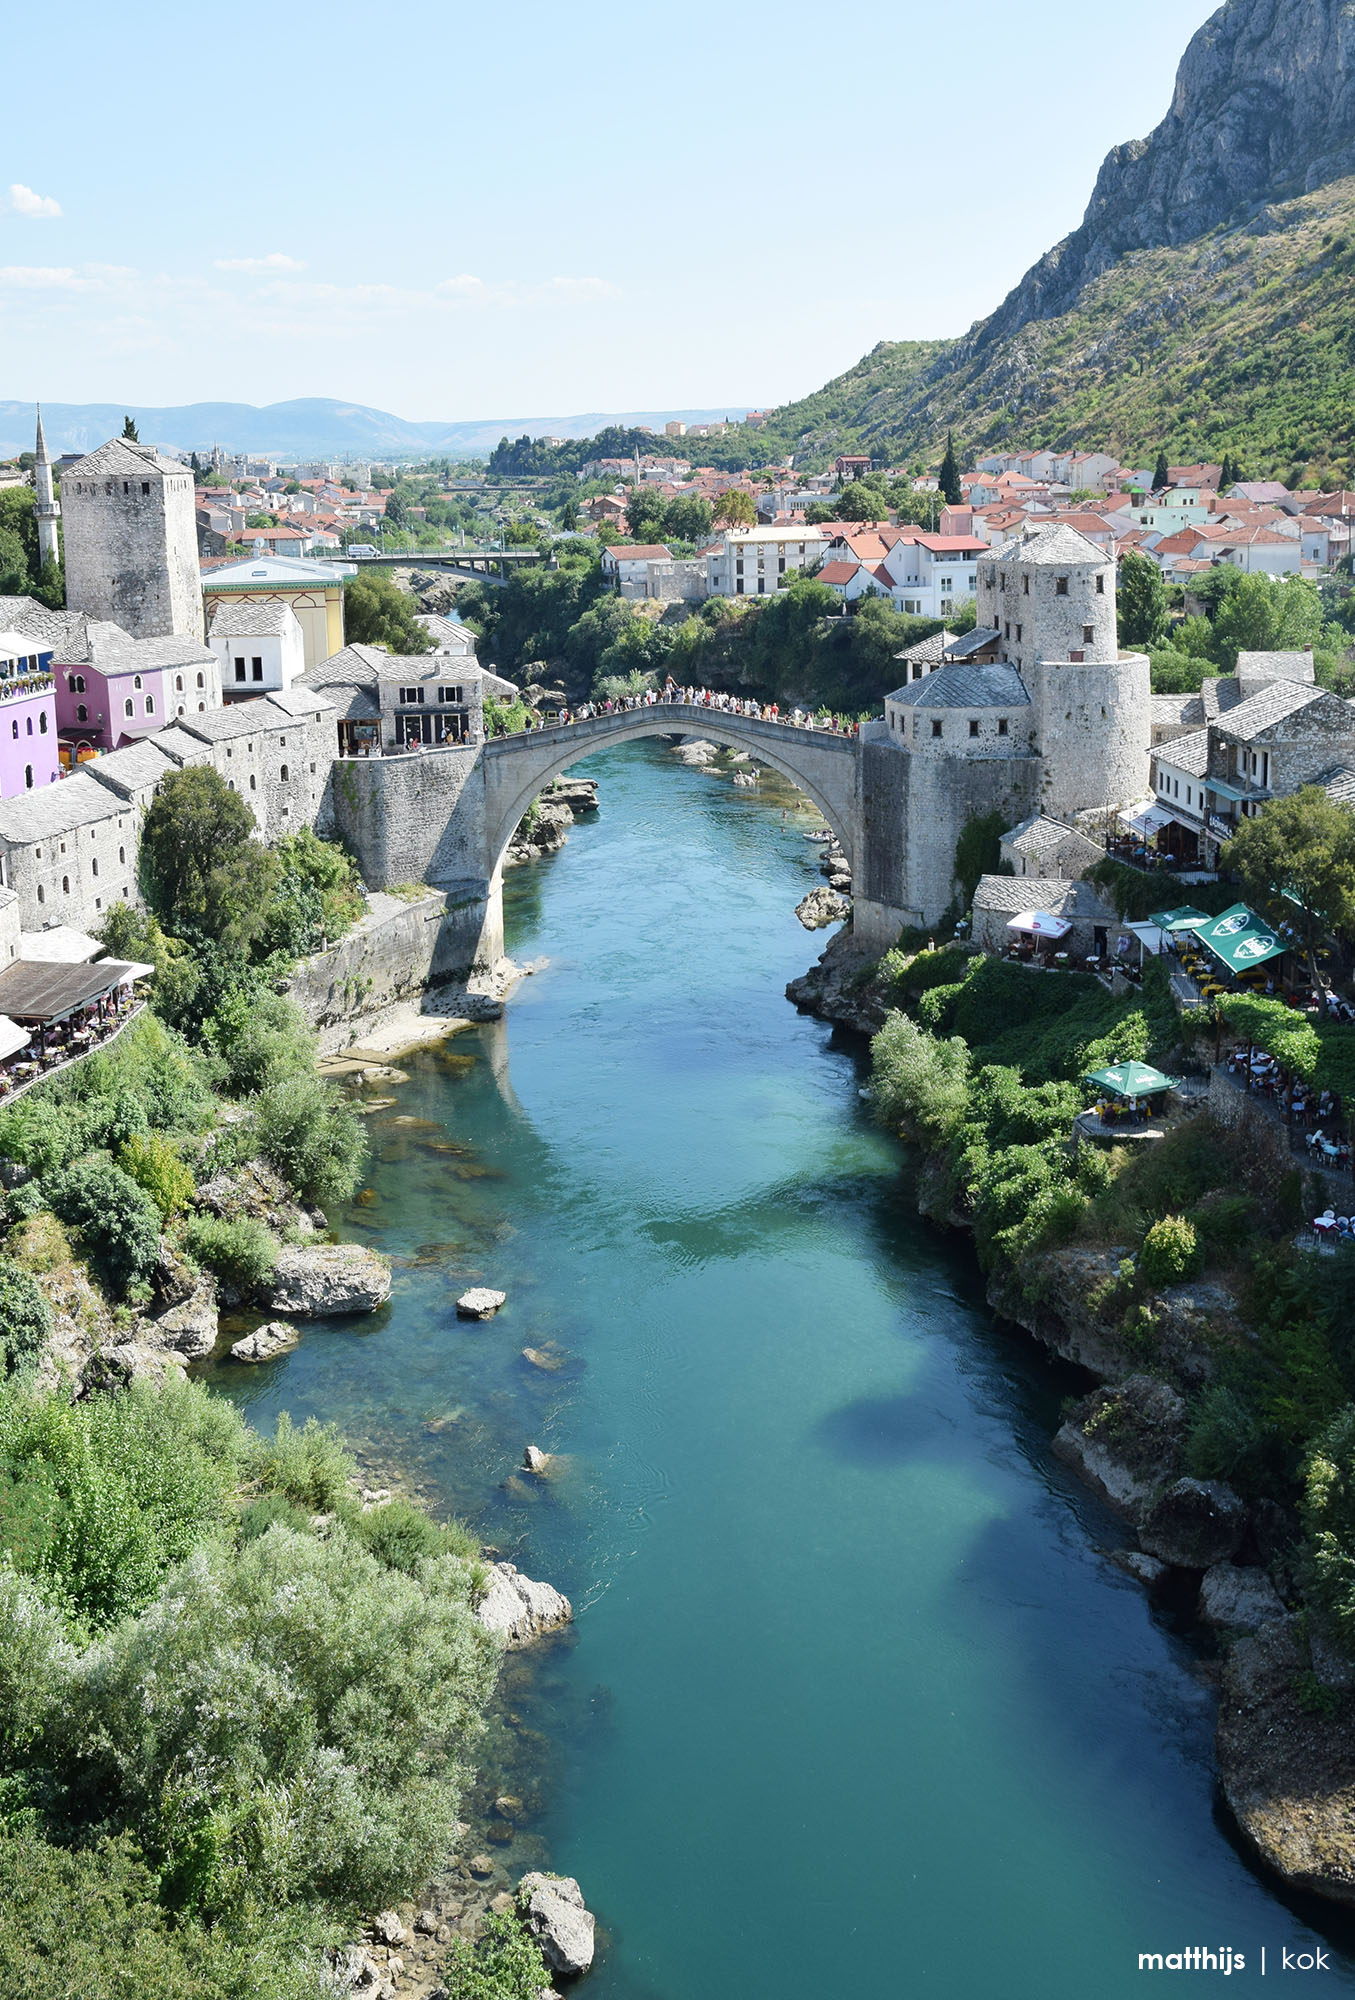 Stari Most, Mostar, Bosnia & Herzegovina | Photo by Matthijs Kok